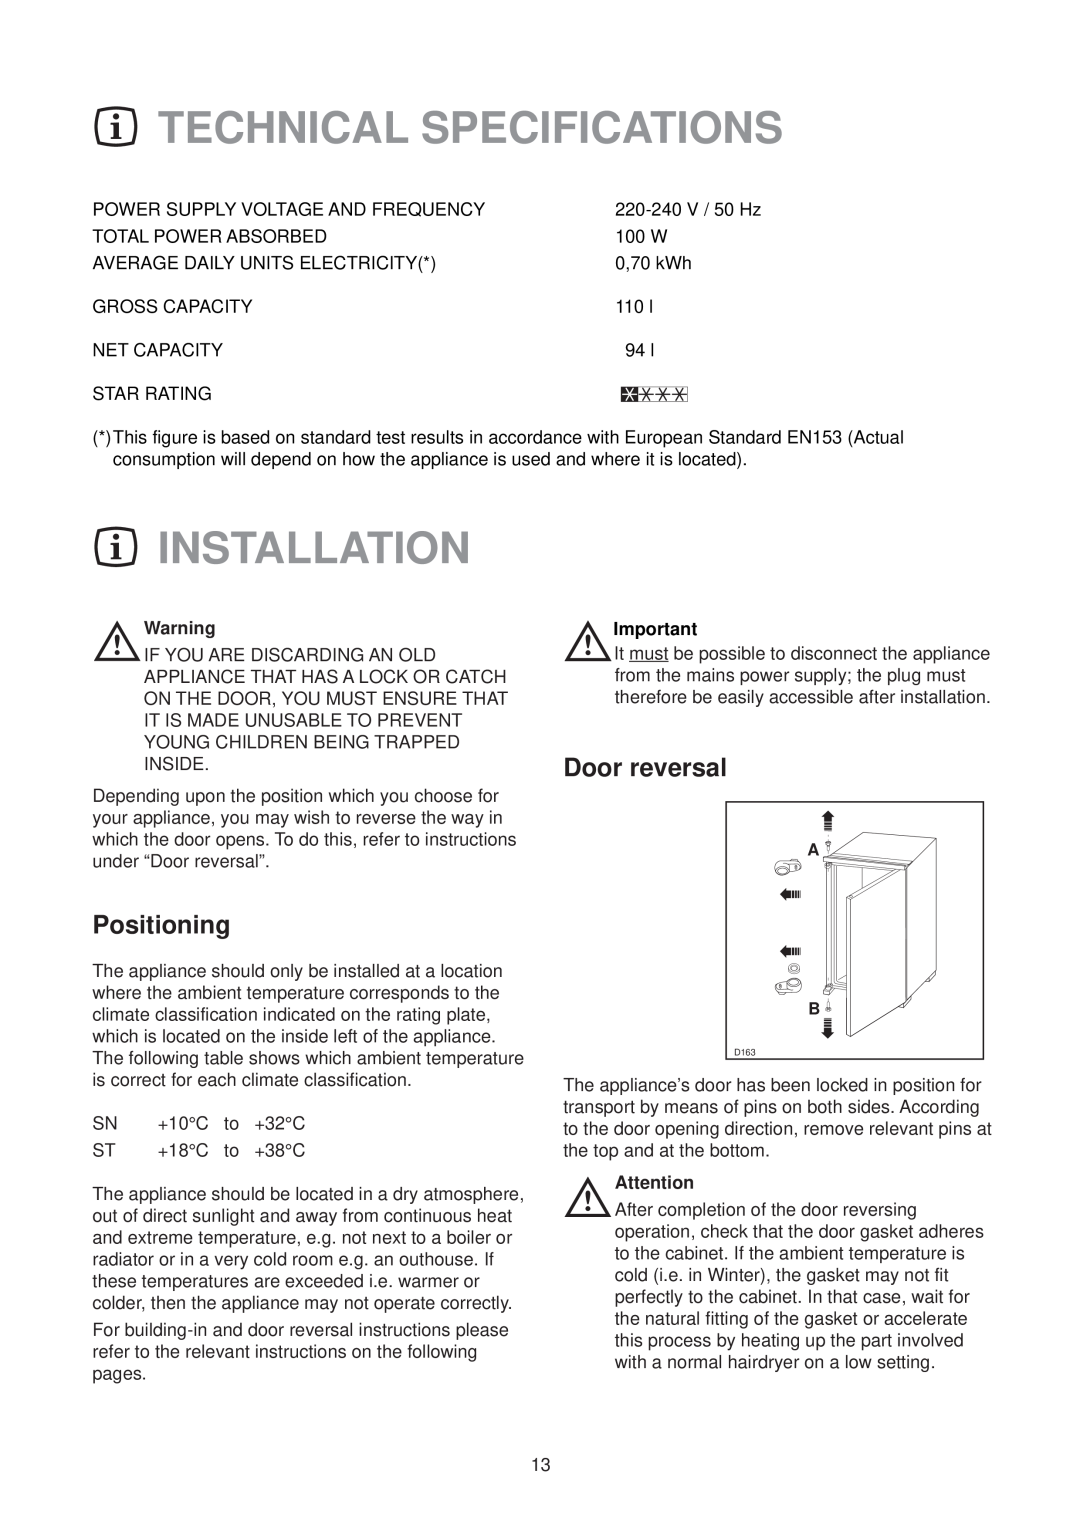 Electrolux EU 6233 manual Technical Specifications, Installation, Positioning, Door reversal 